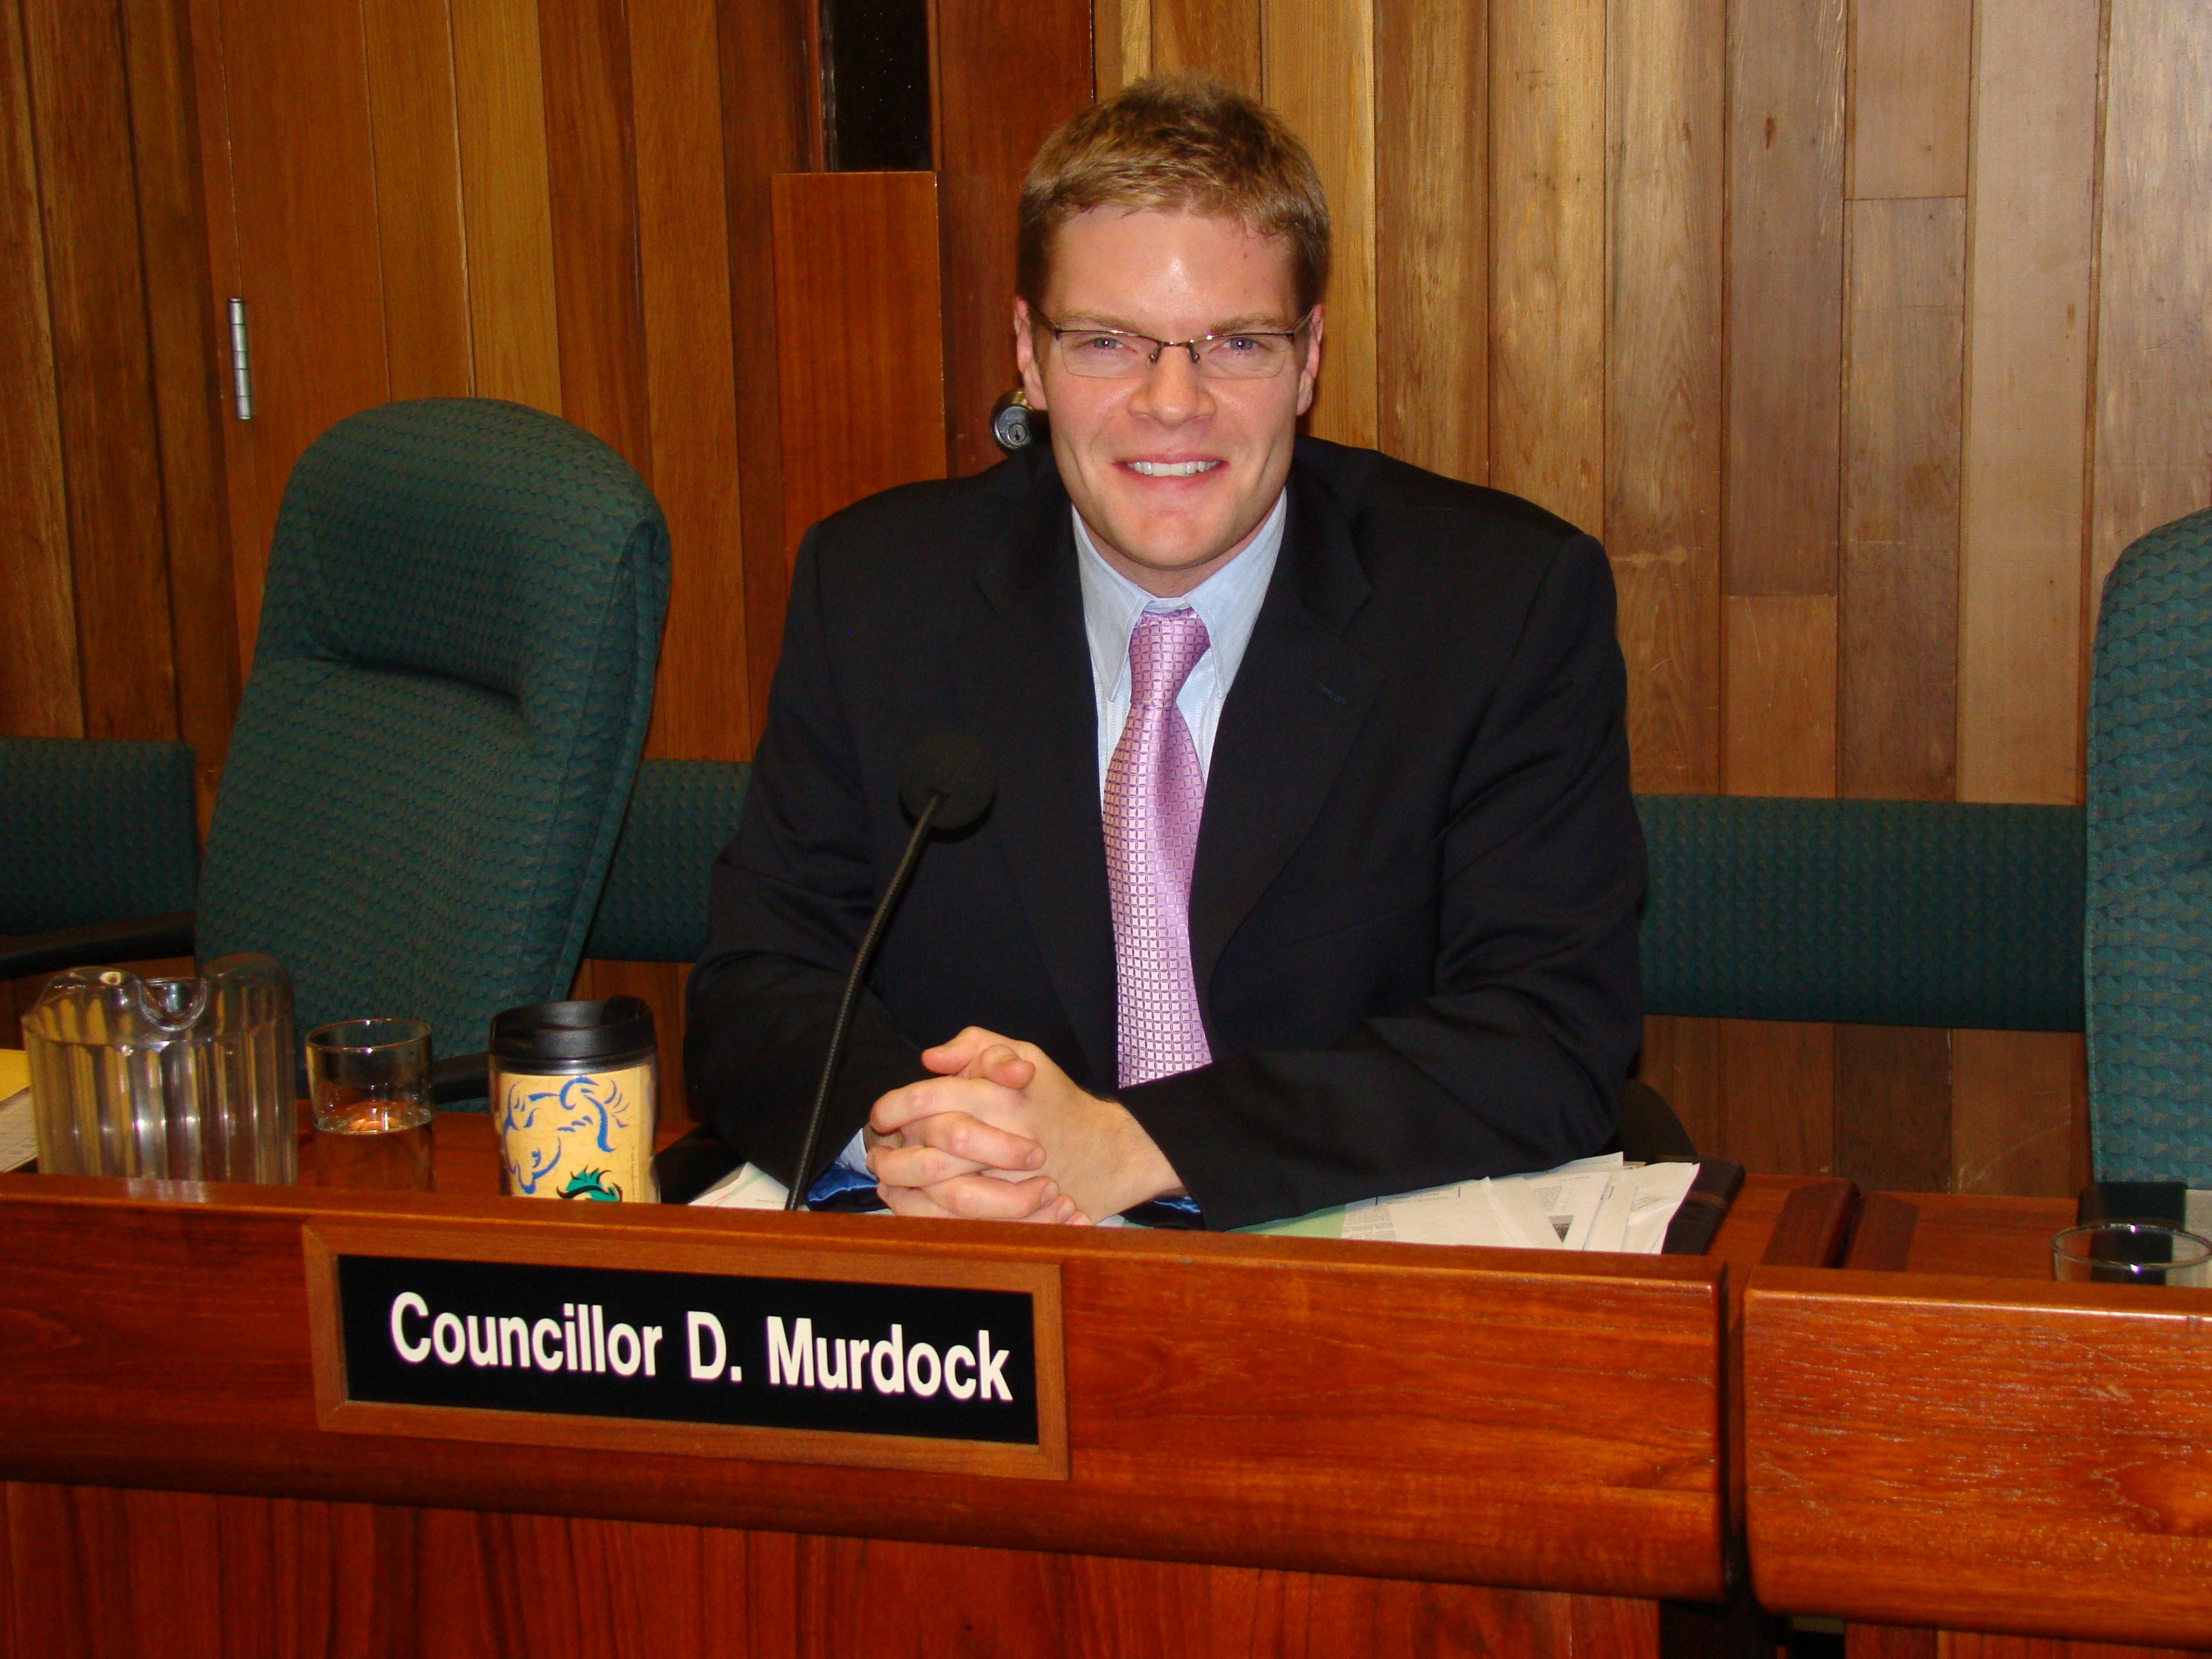 Dean sits at a desk behind a plaque that reads "Councillor D. Murdock"